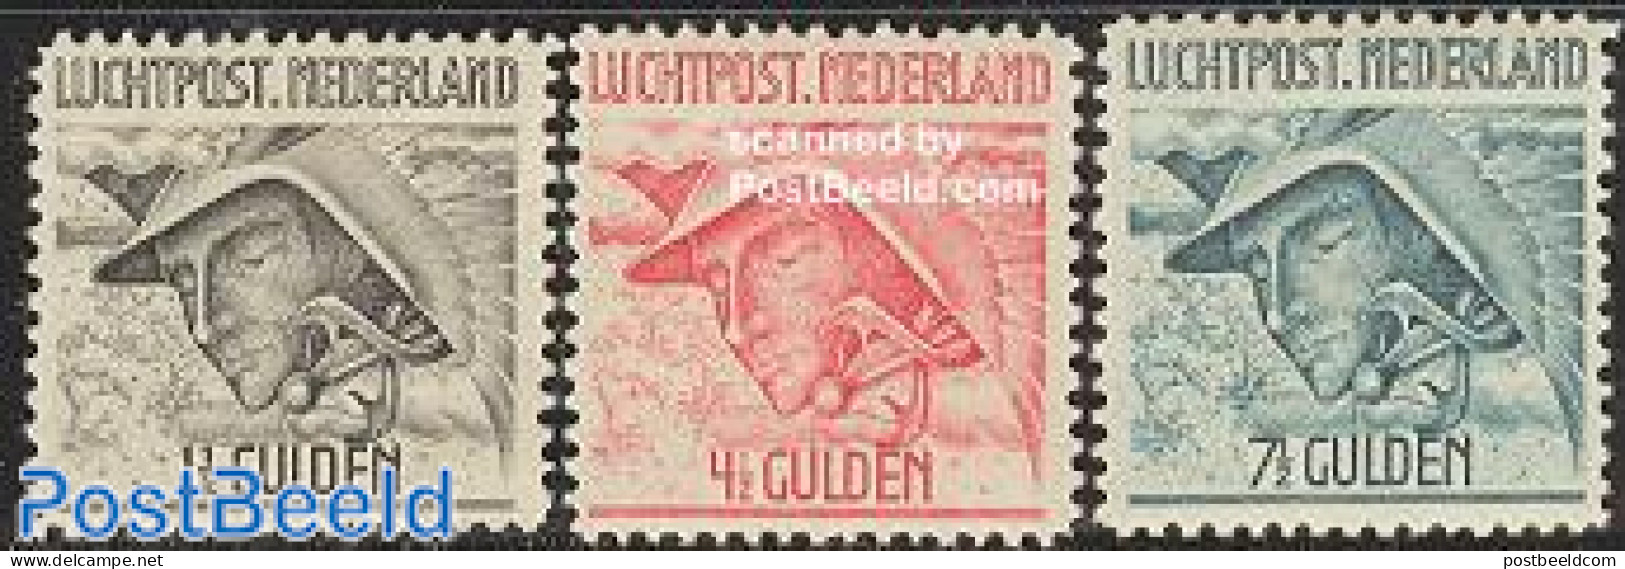 Netherlands 1929 Airmail, Mercurius 3v, Mint NH, Religion - Greek & Roman Gods - Luftpost